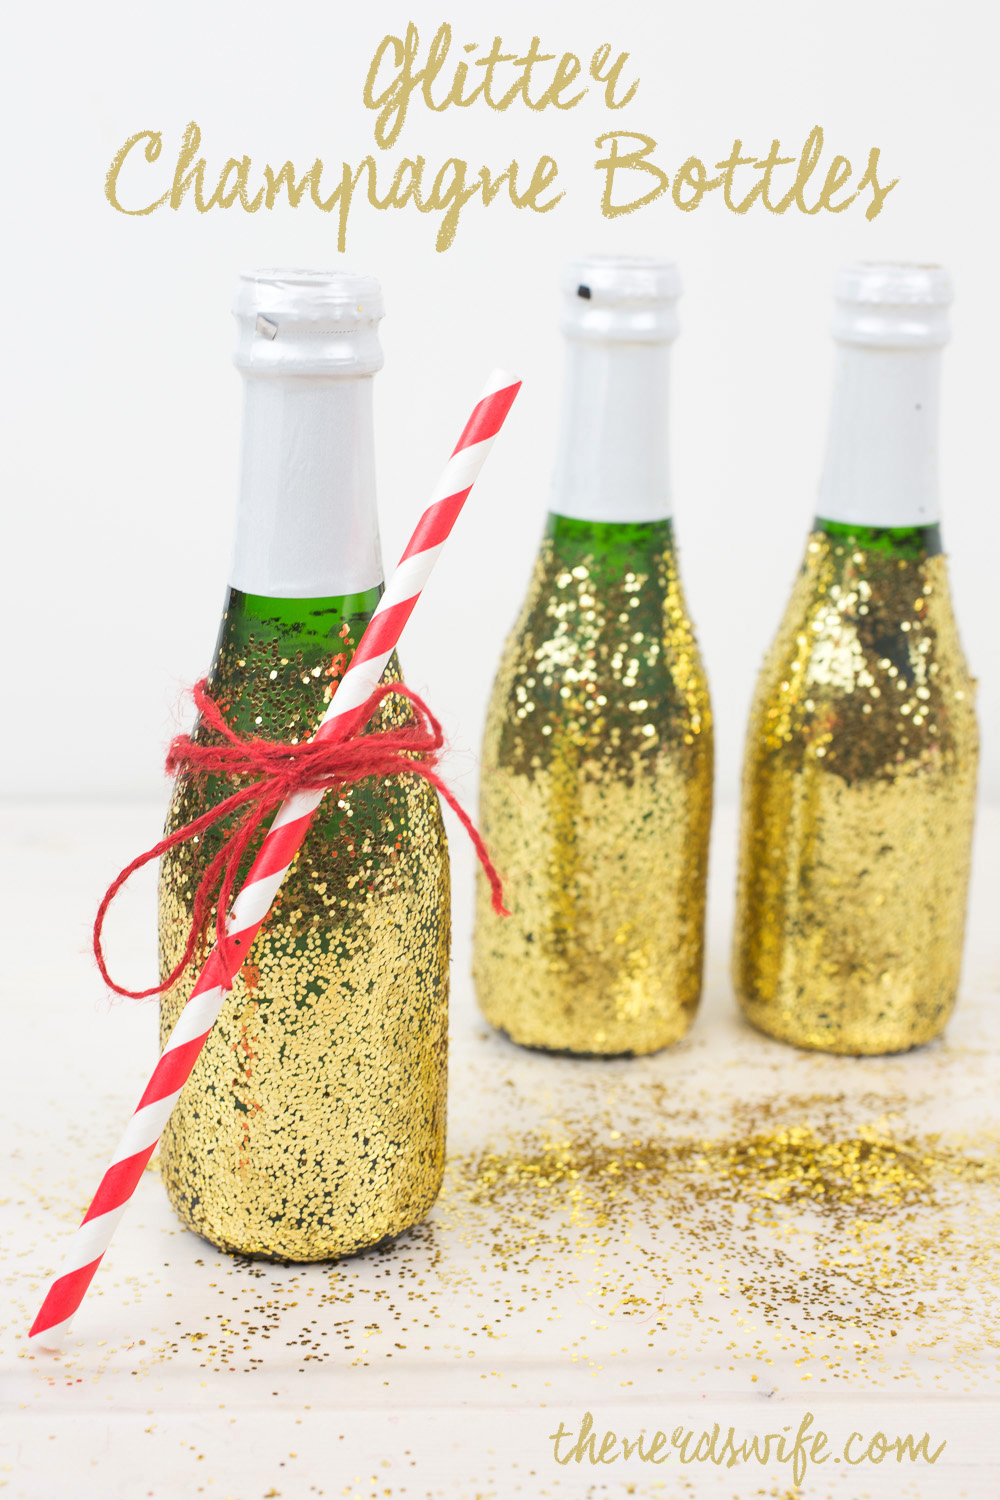 http://thenerdswife.com/wp-content/uploads/2015/02/Glitter-Champagne-Bottles.jpg